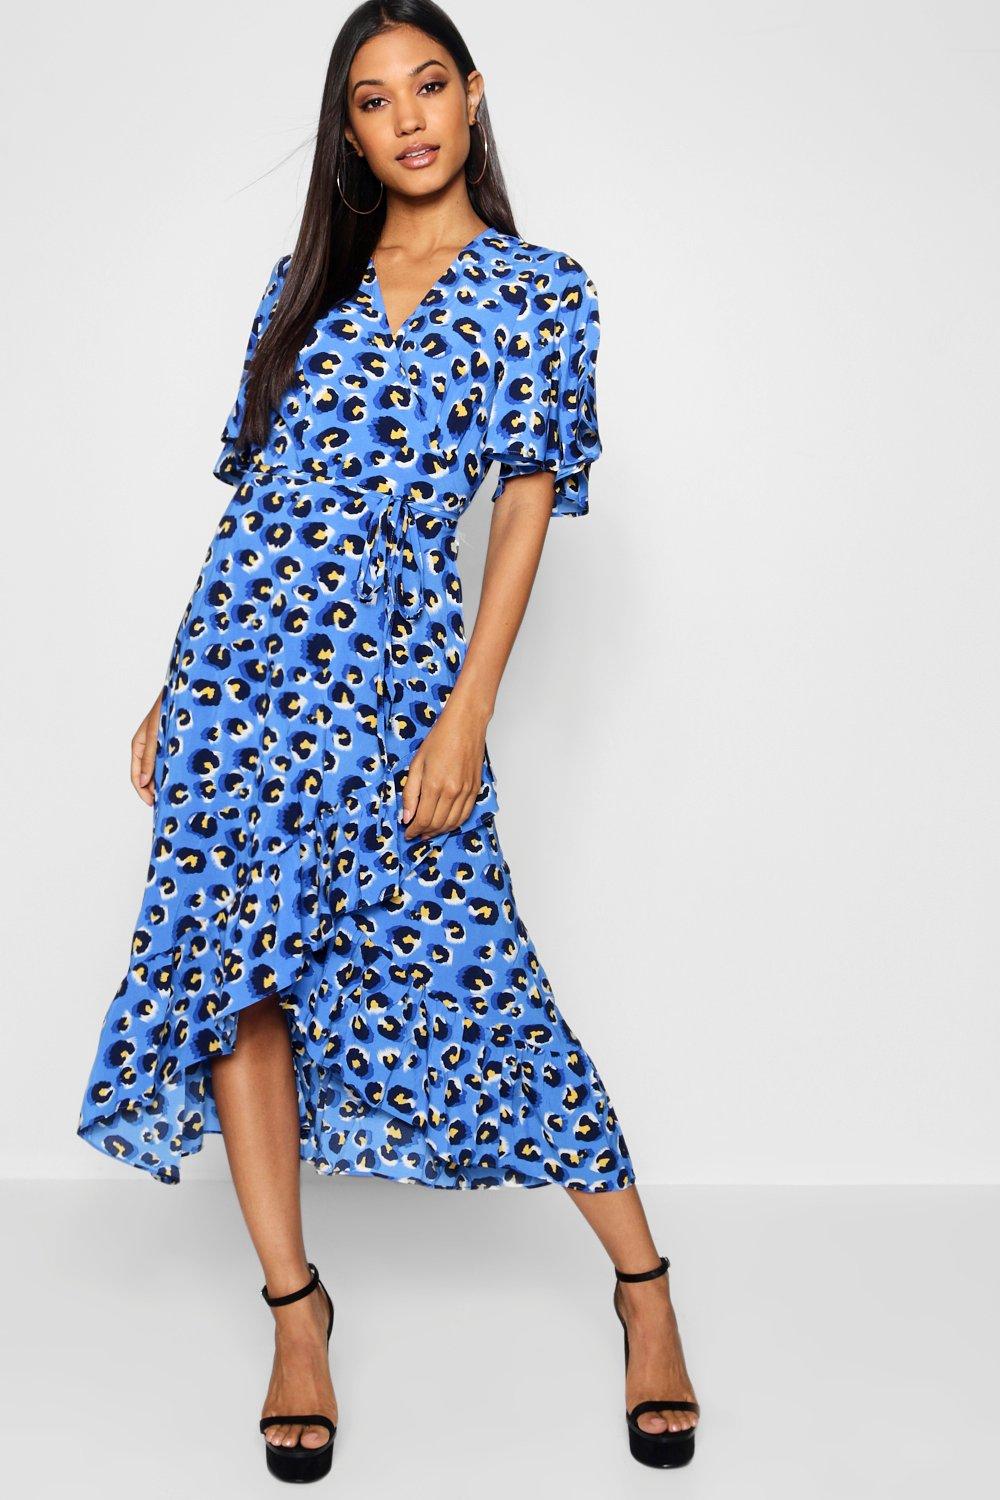 leopard print wrap dress uk